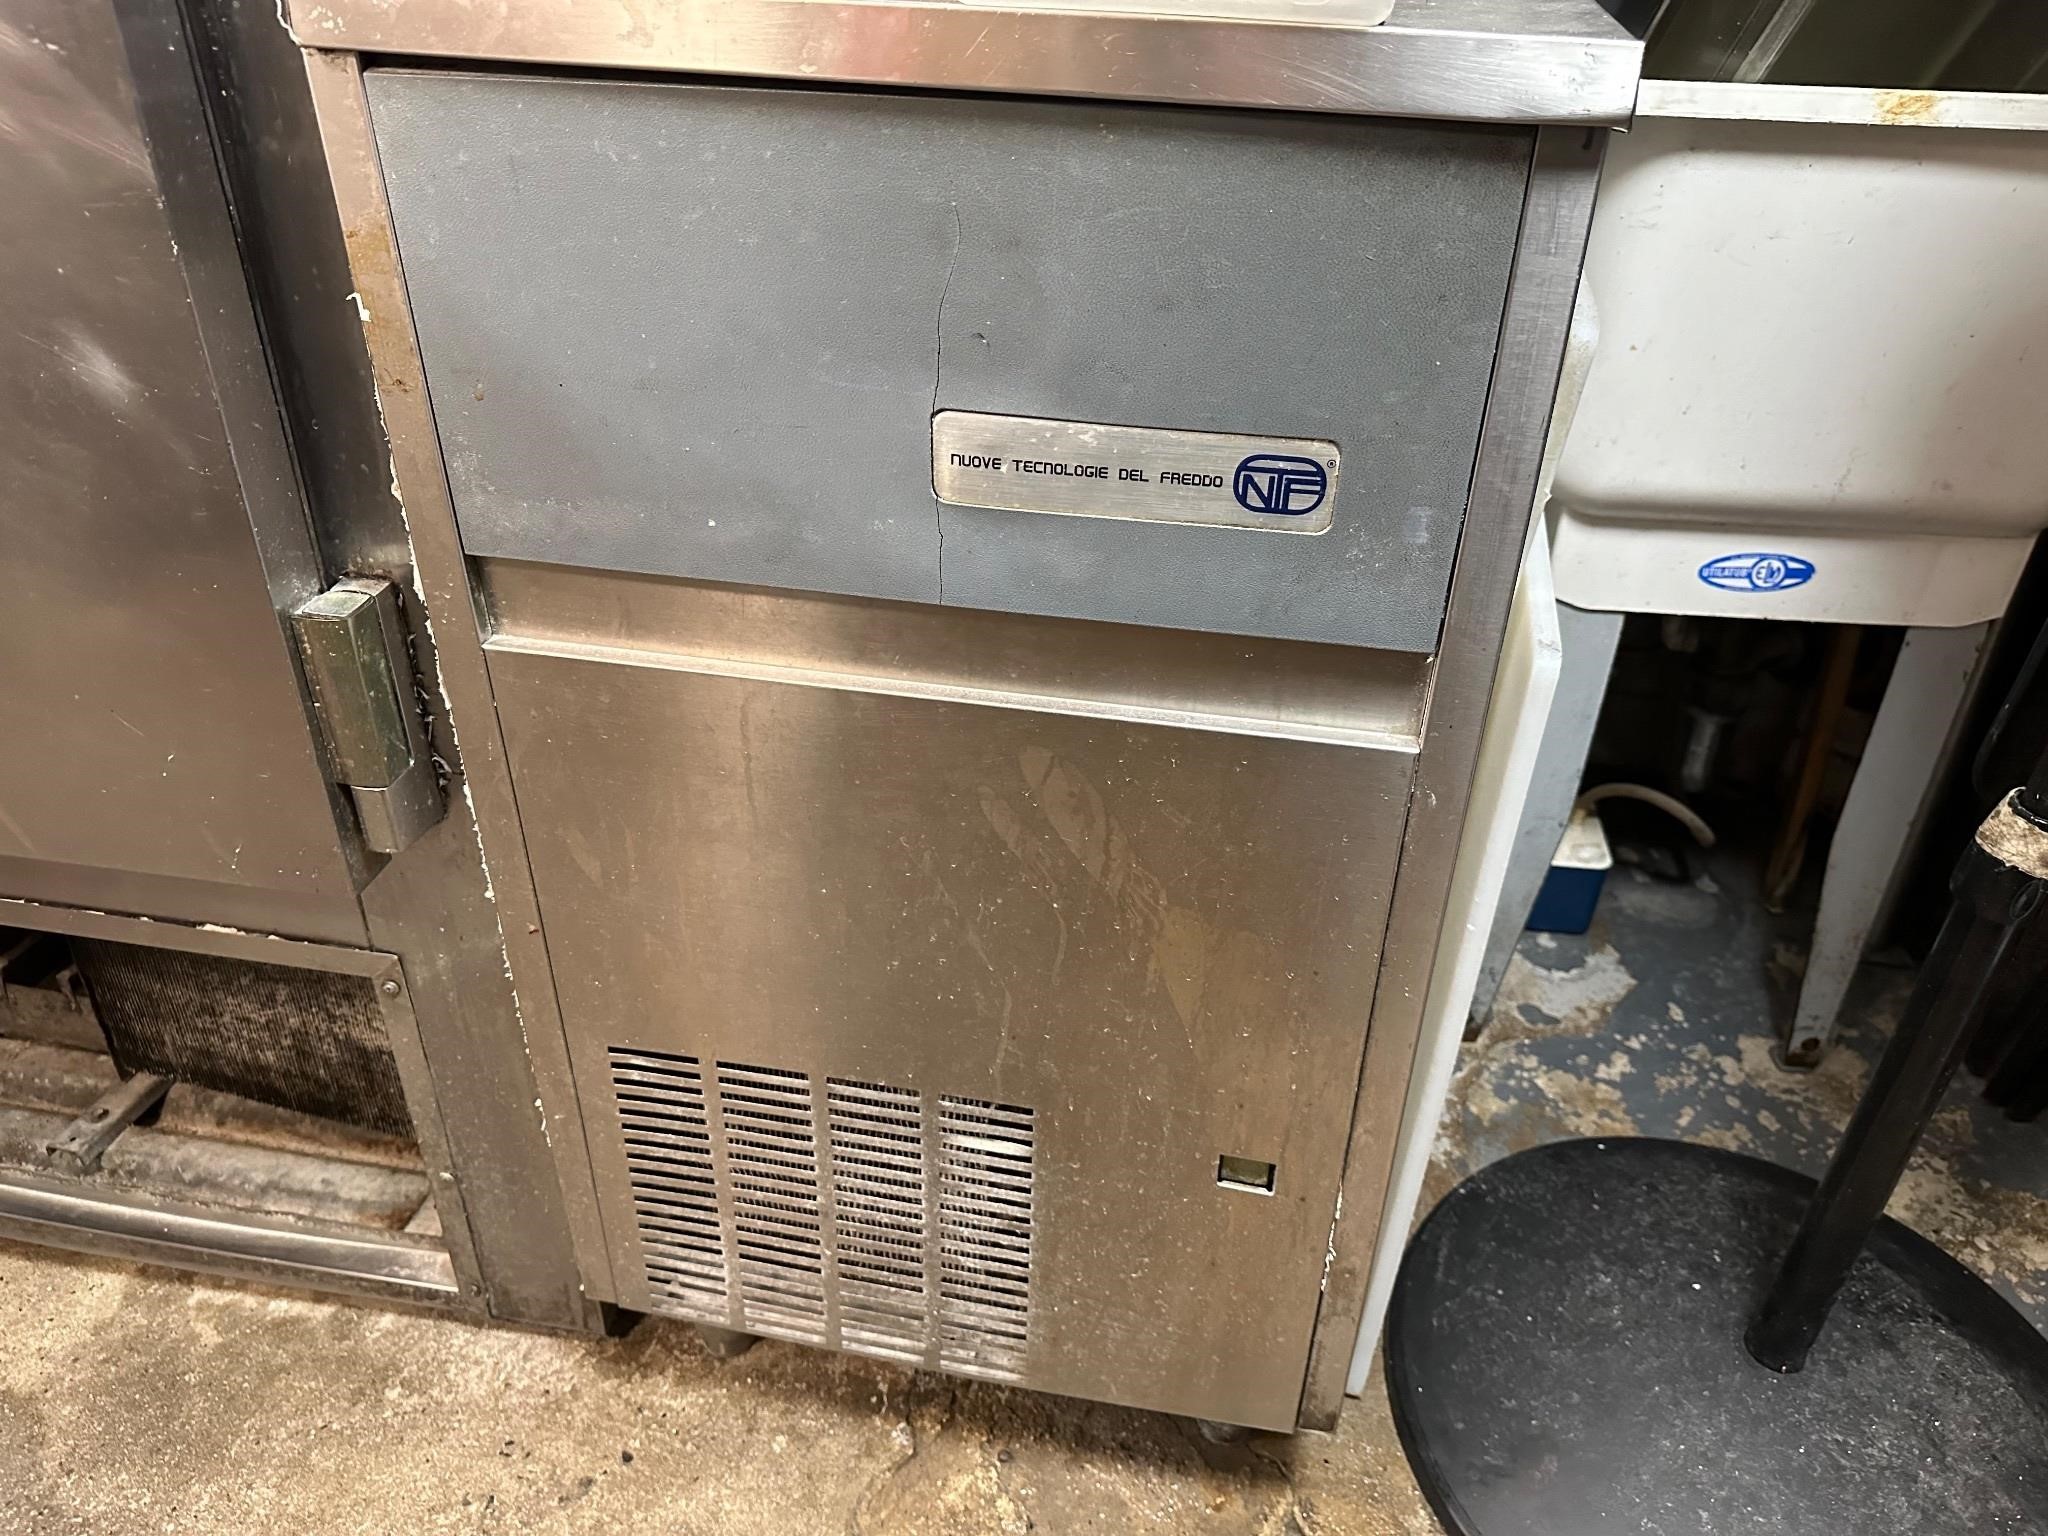 Nuevo Tech Ice Machine